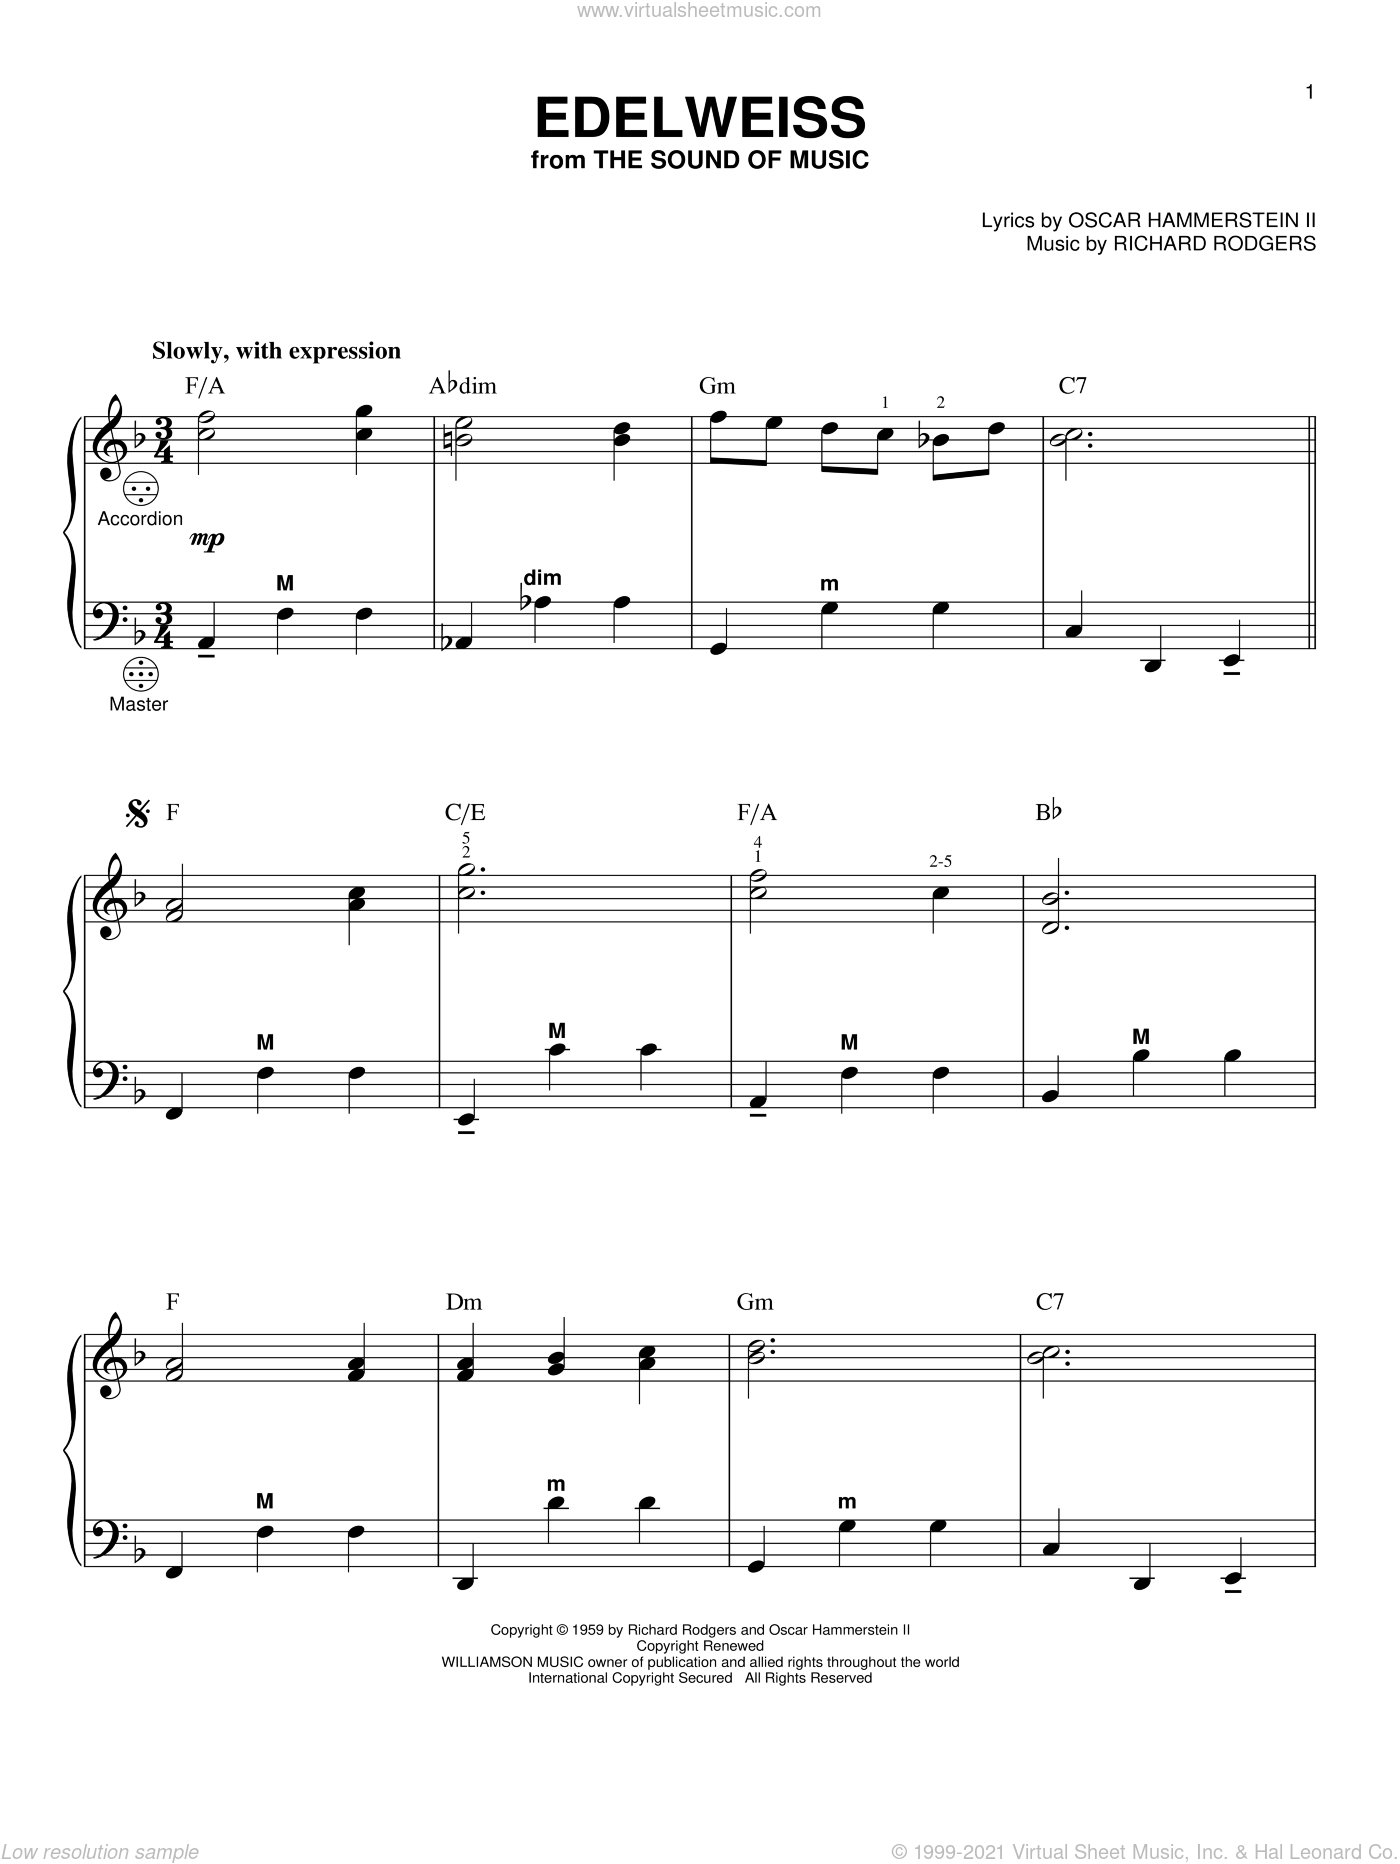 Hammerstein - Edelweiss sheet music for accordion [PDF]